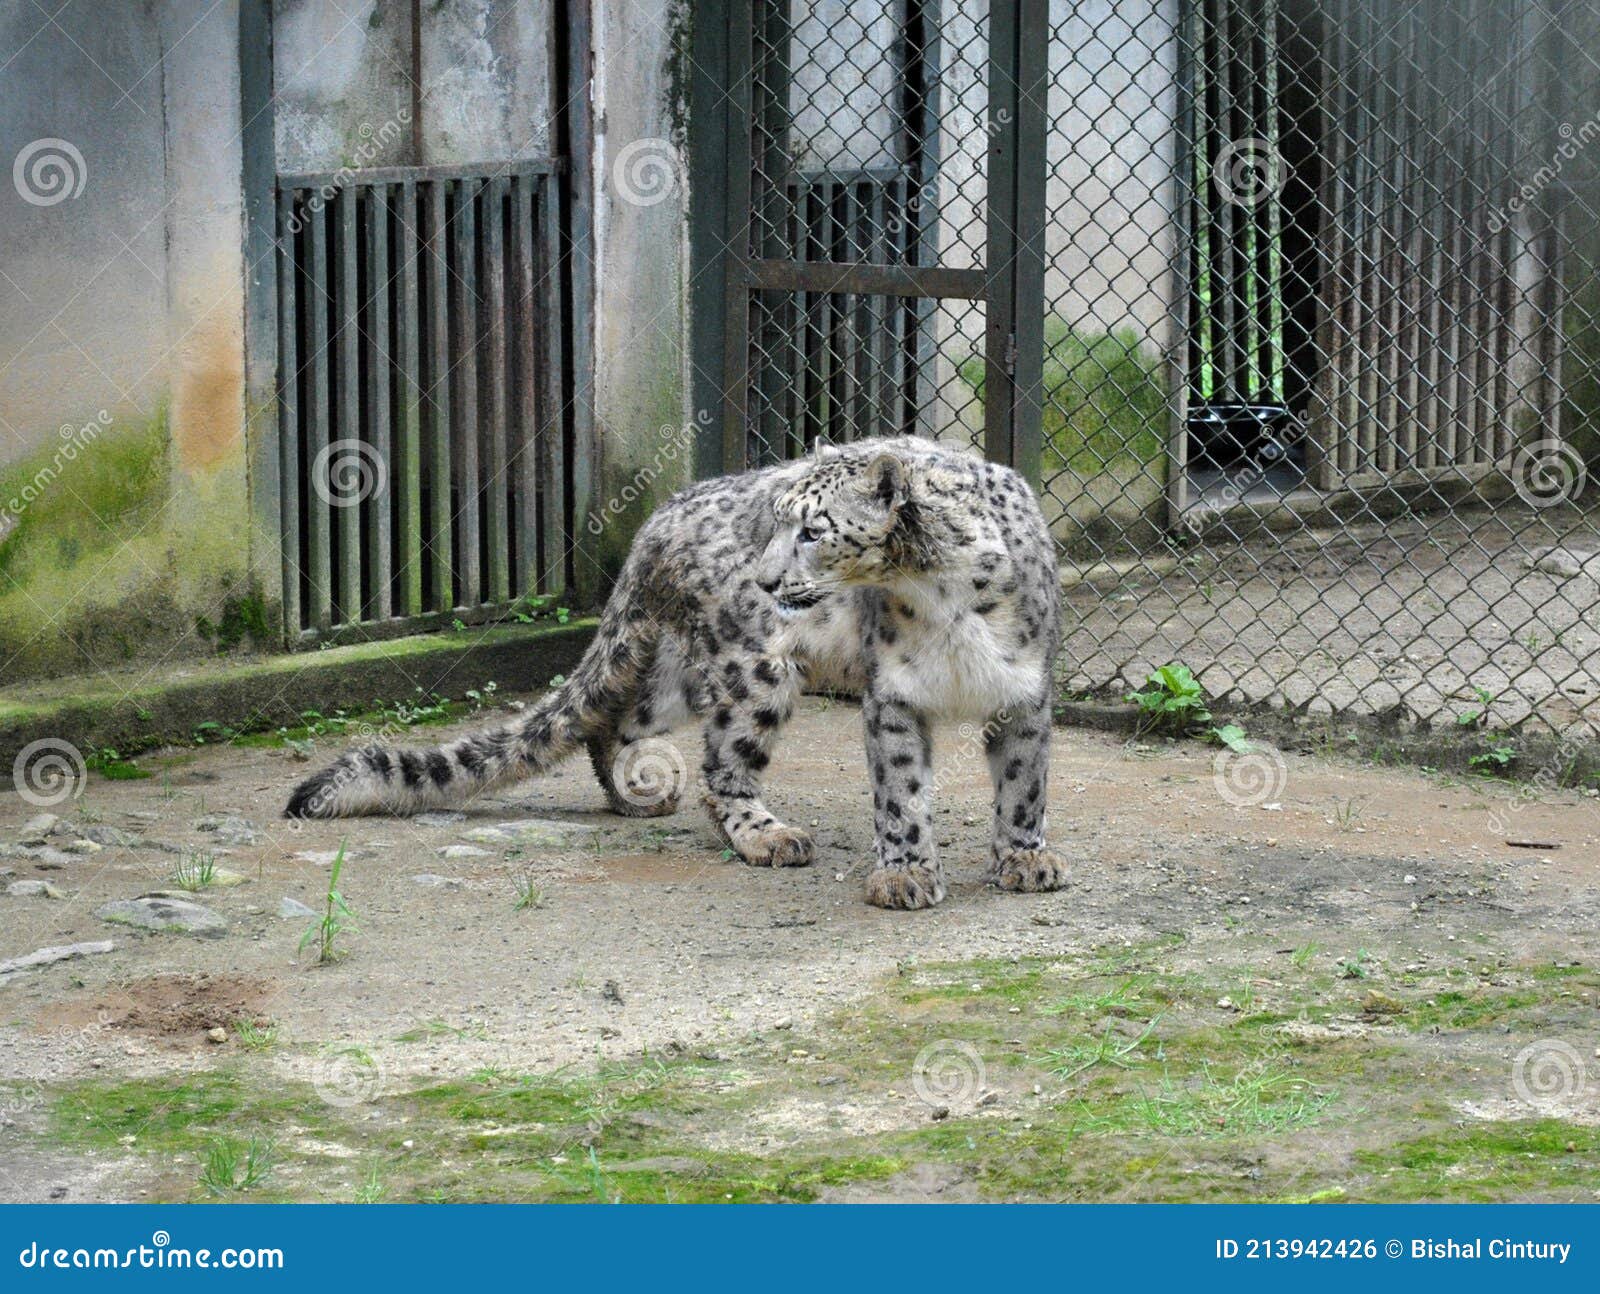 World Endangered Species Going Extinction Stock Photo - Image of malaika,  cage: 213942426